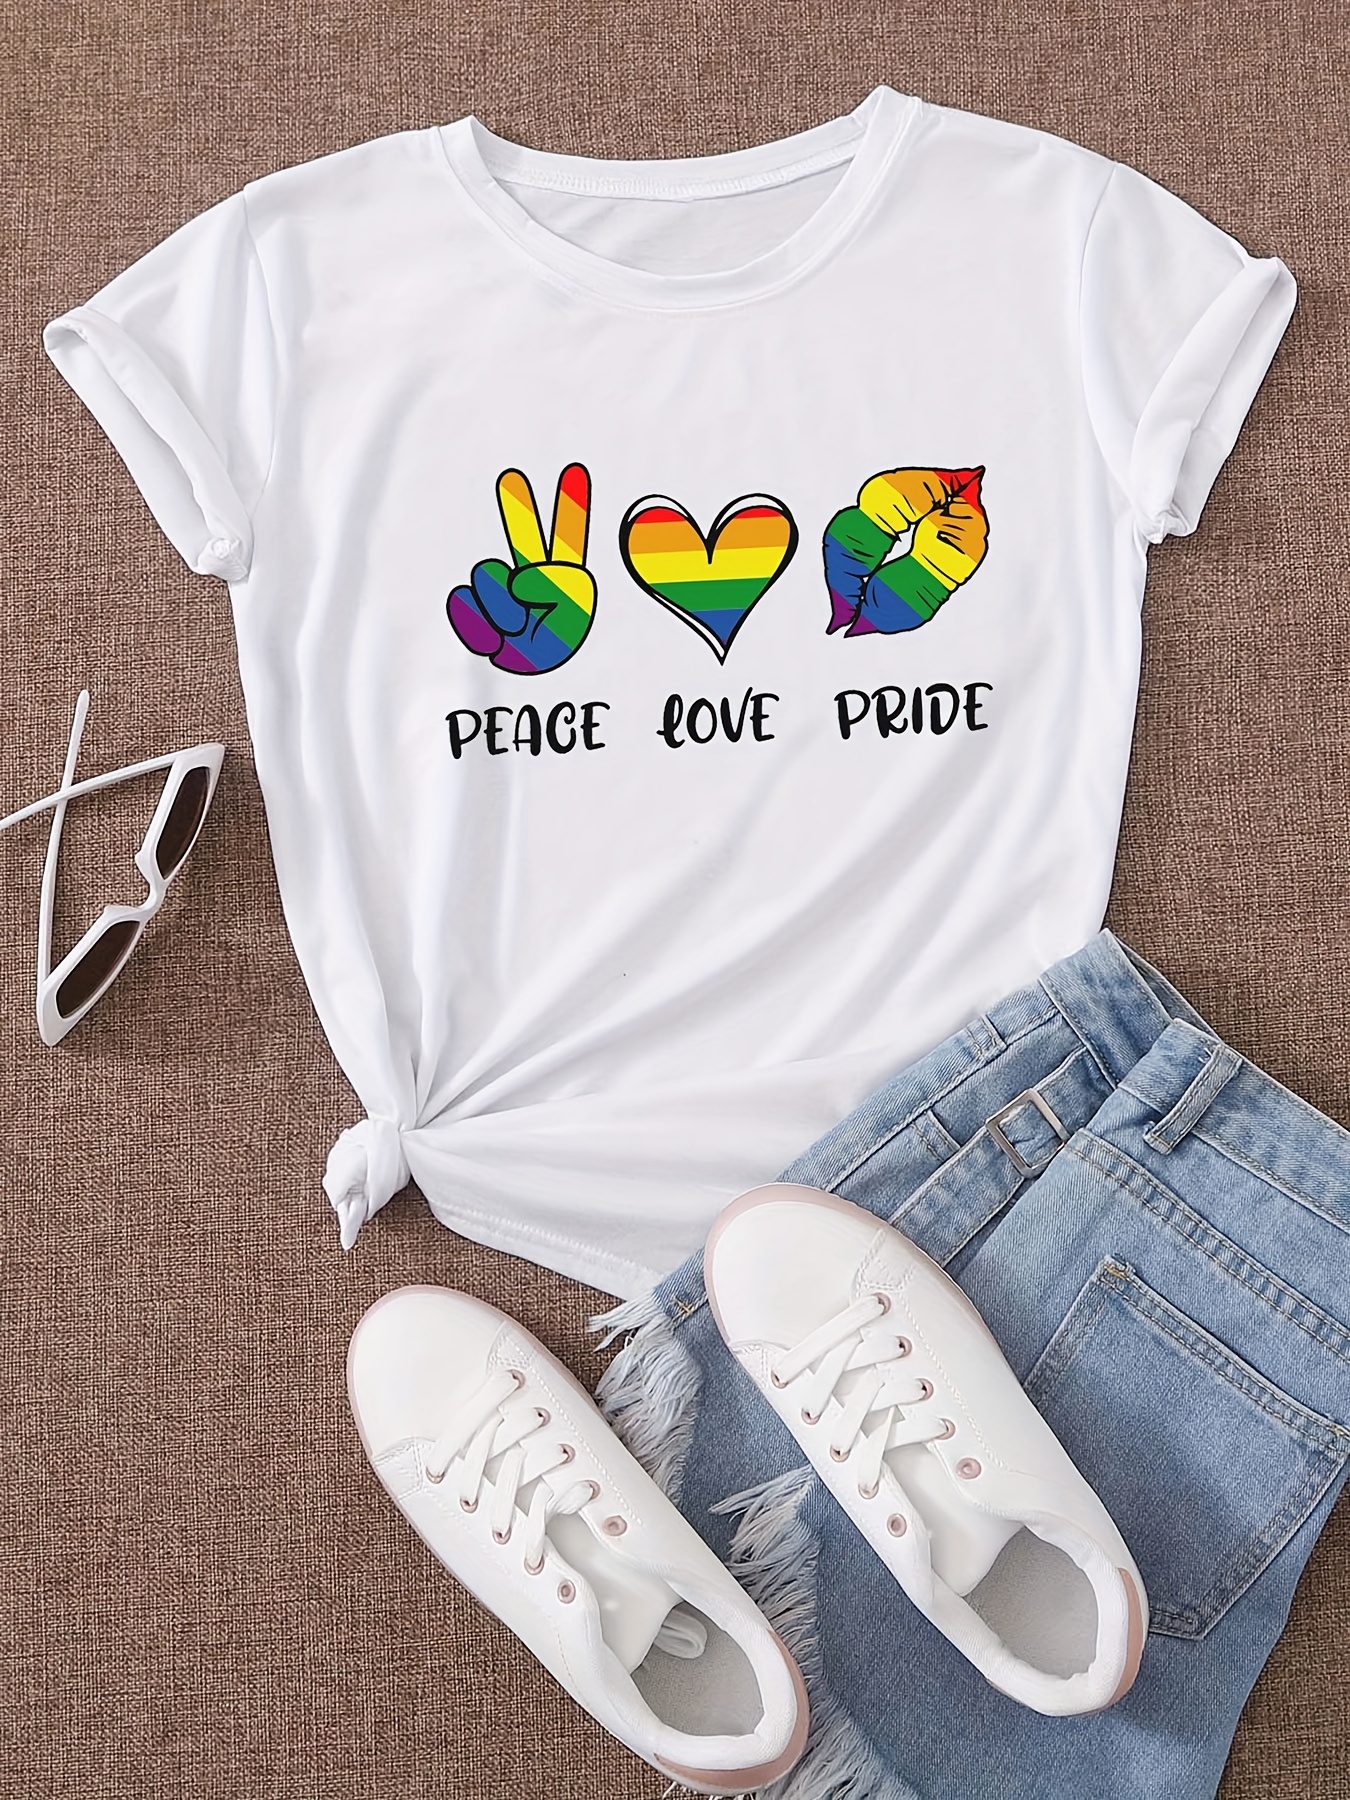 Tie Dye Shirt Women Rainbow Tie Dye Shirts Heart T Shirt Pride Shirt LGBTQ  T Shirts Funny Graphic Short Sleeve Tops at  Women’s Clothing store